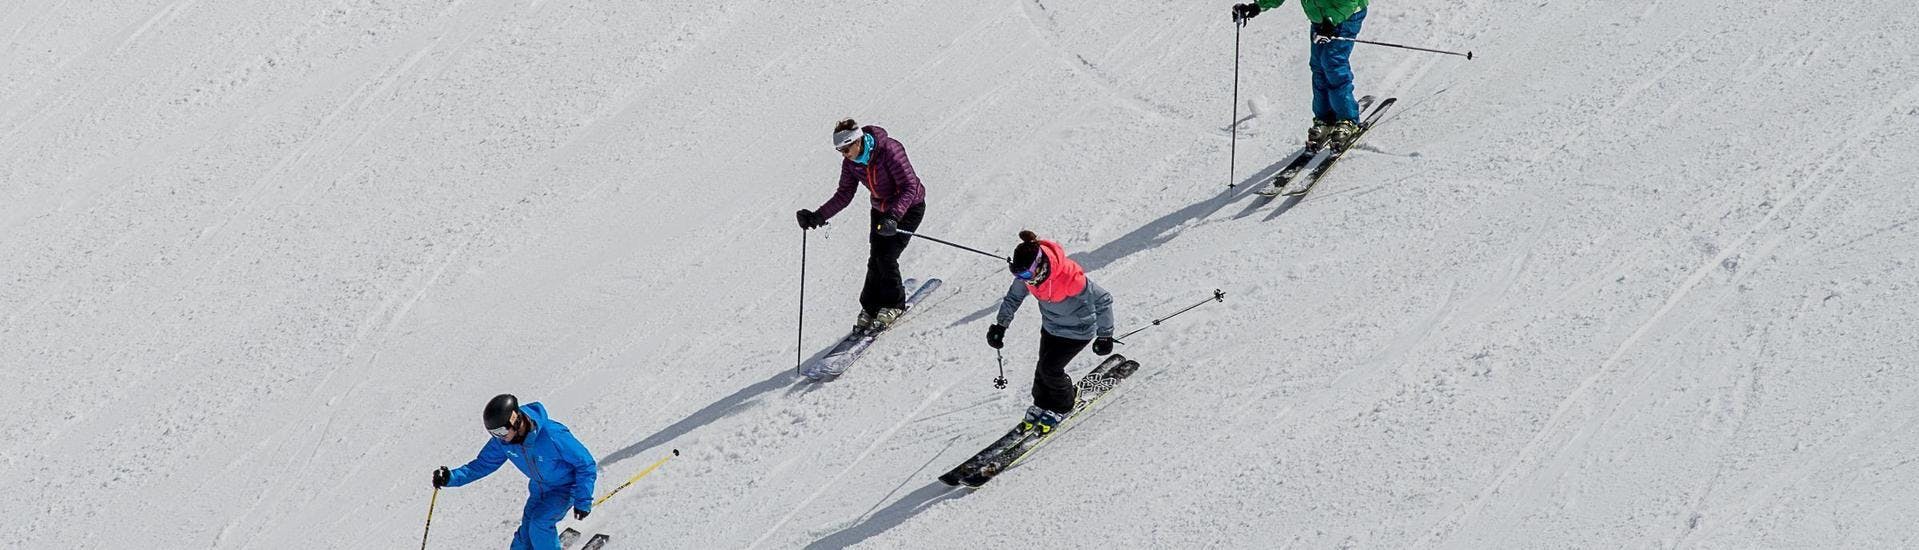 Lezioni private di sci per adulti di tutti i livelli.